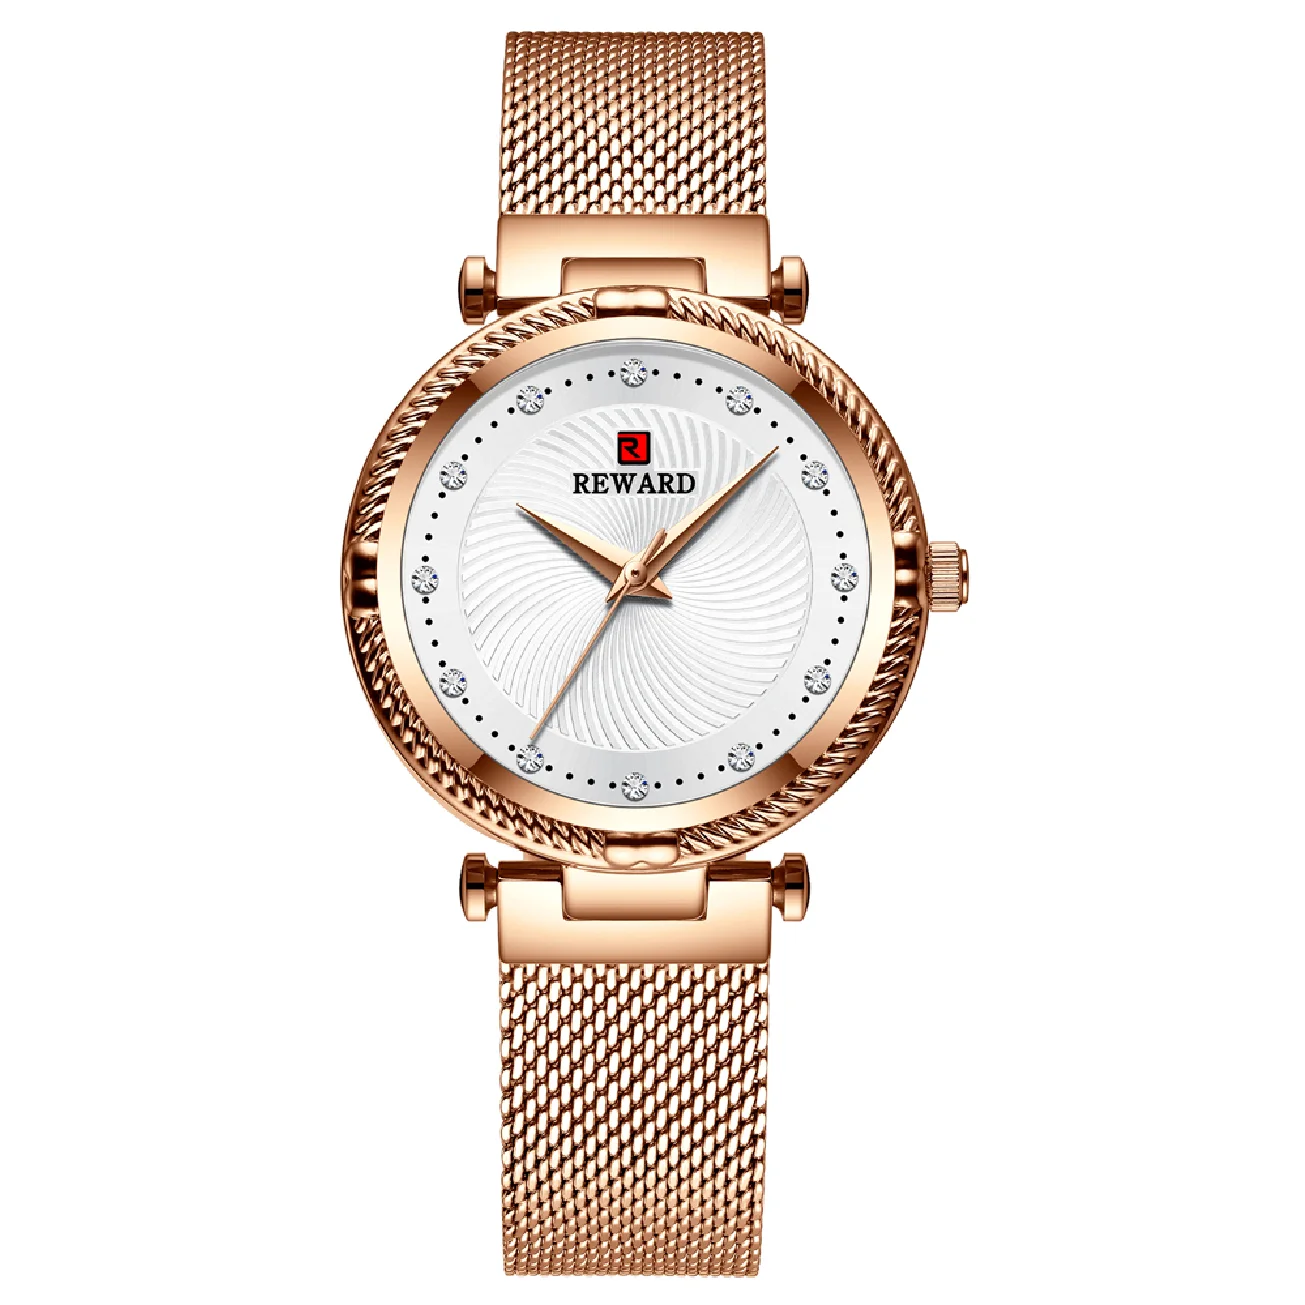 2022 REWARD Luxury Women Watch Fashion Casual Waterproof Quartz Watches Elegant Clock Ladies Wrist Watch Gift for Girls Wife enlarge